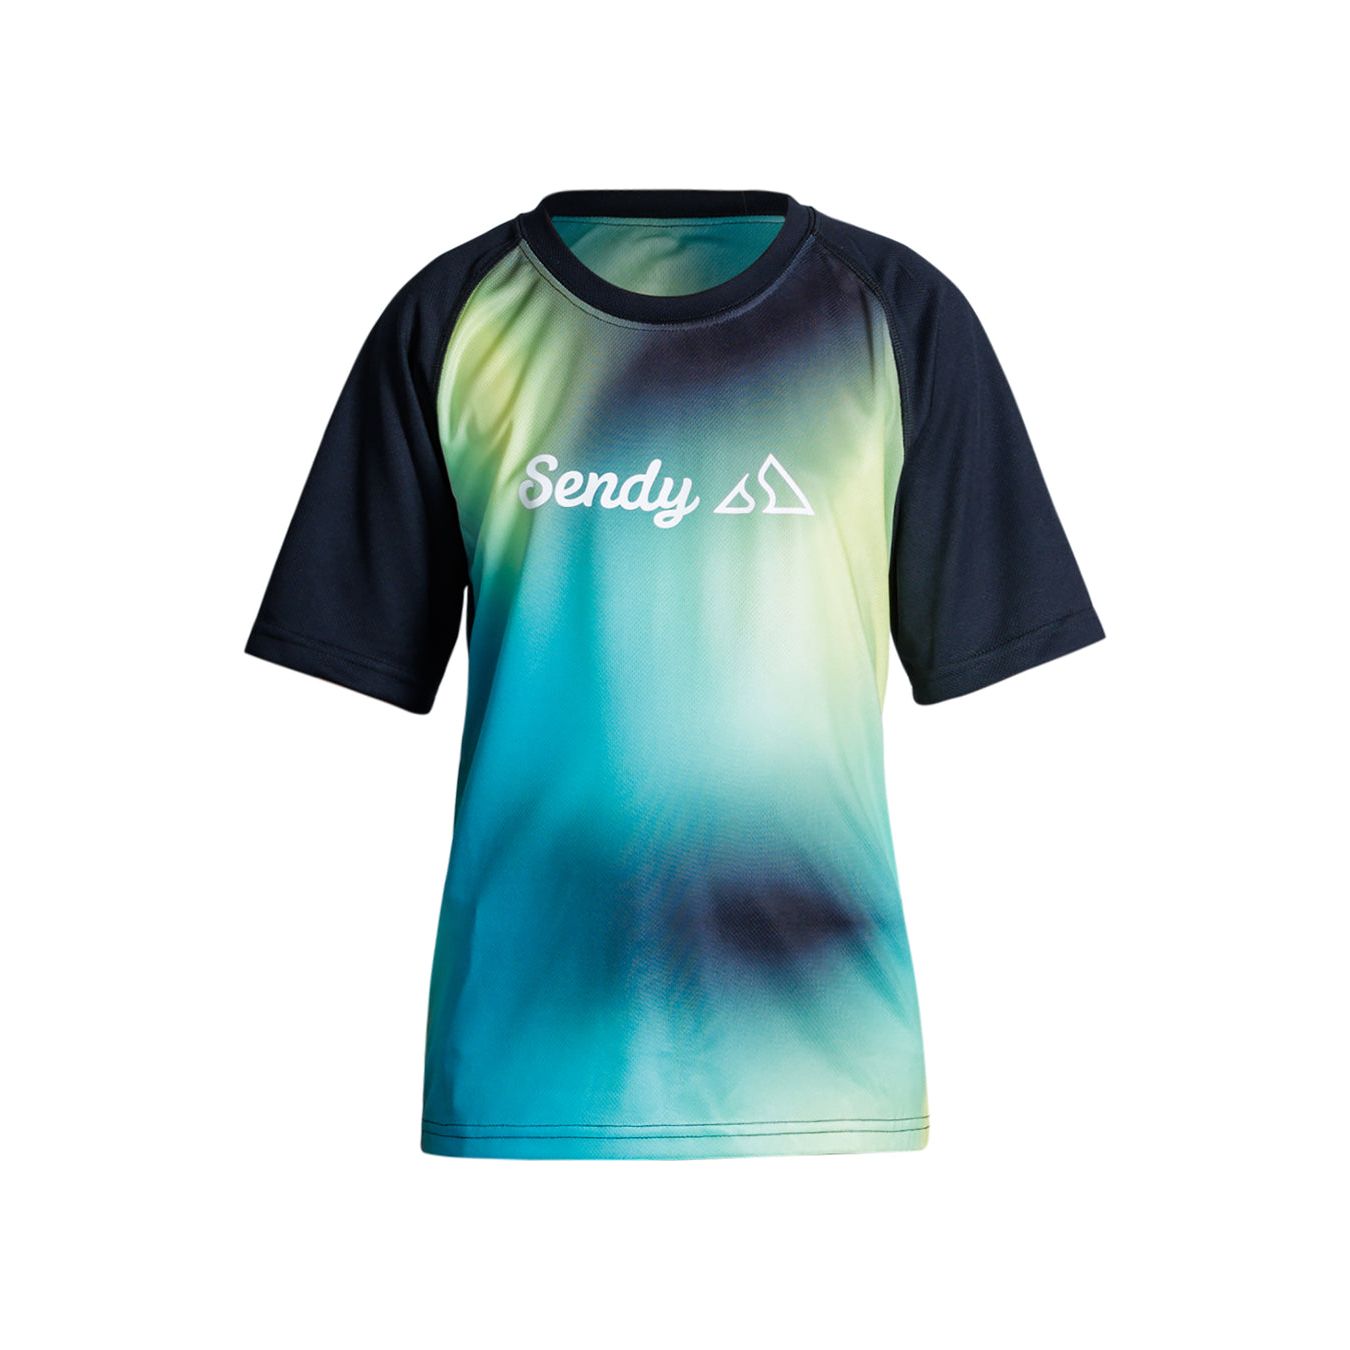 Sendy Send It Short Sleeve Youth Jersey - Youth M - Swirl